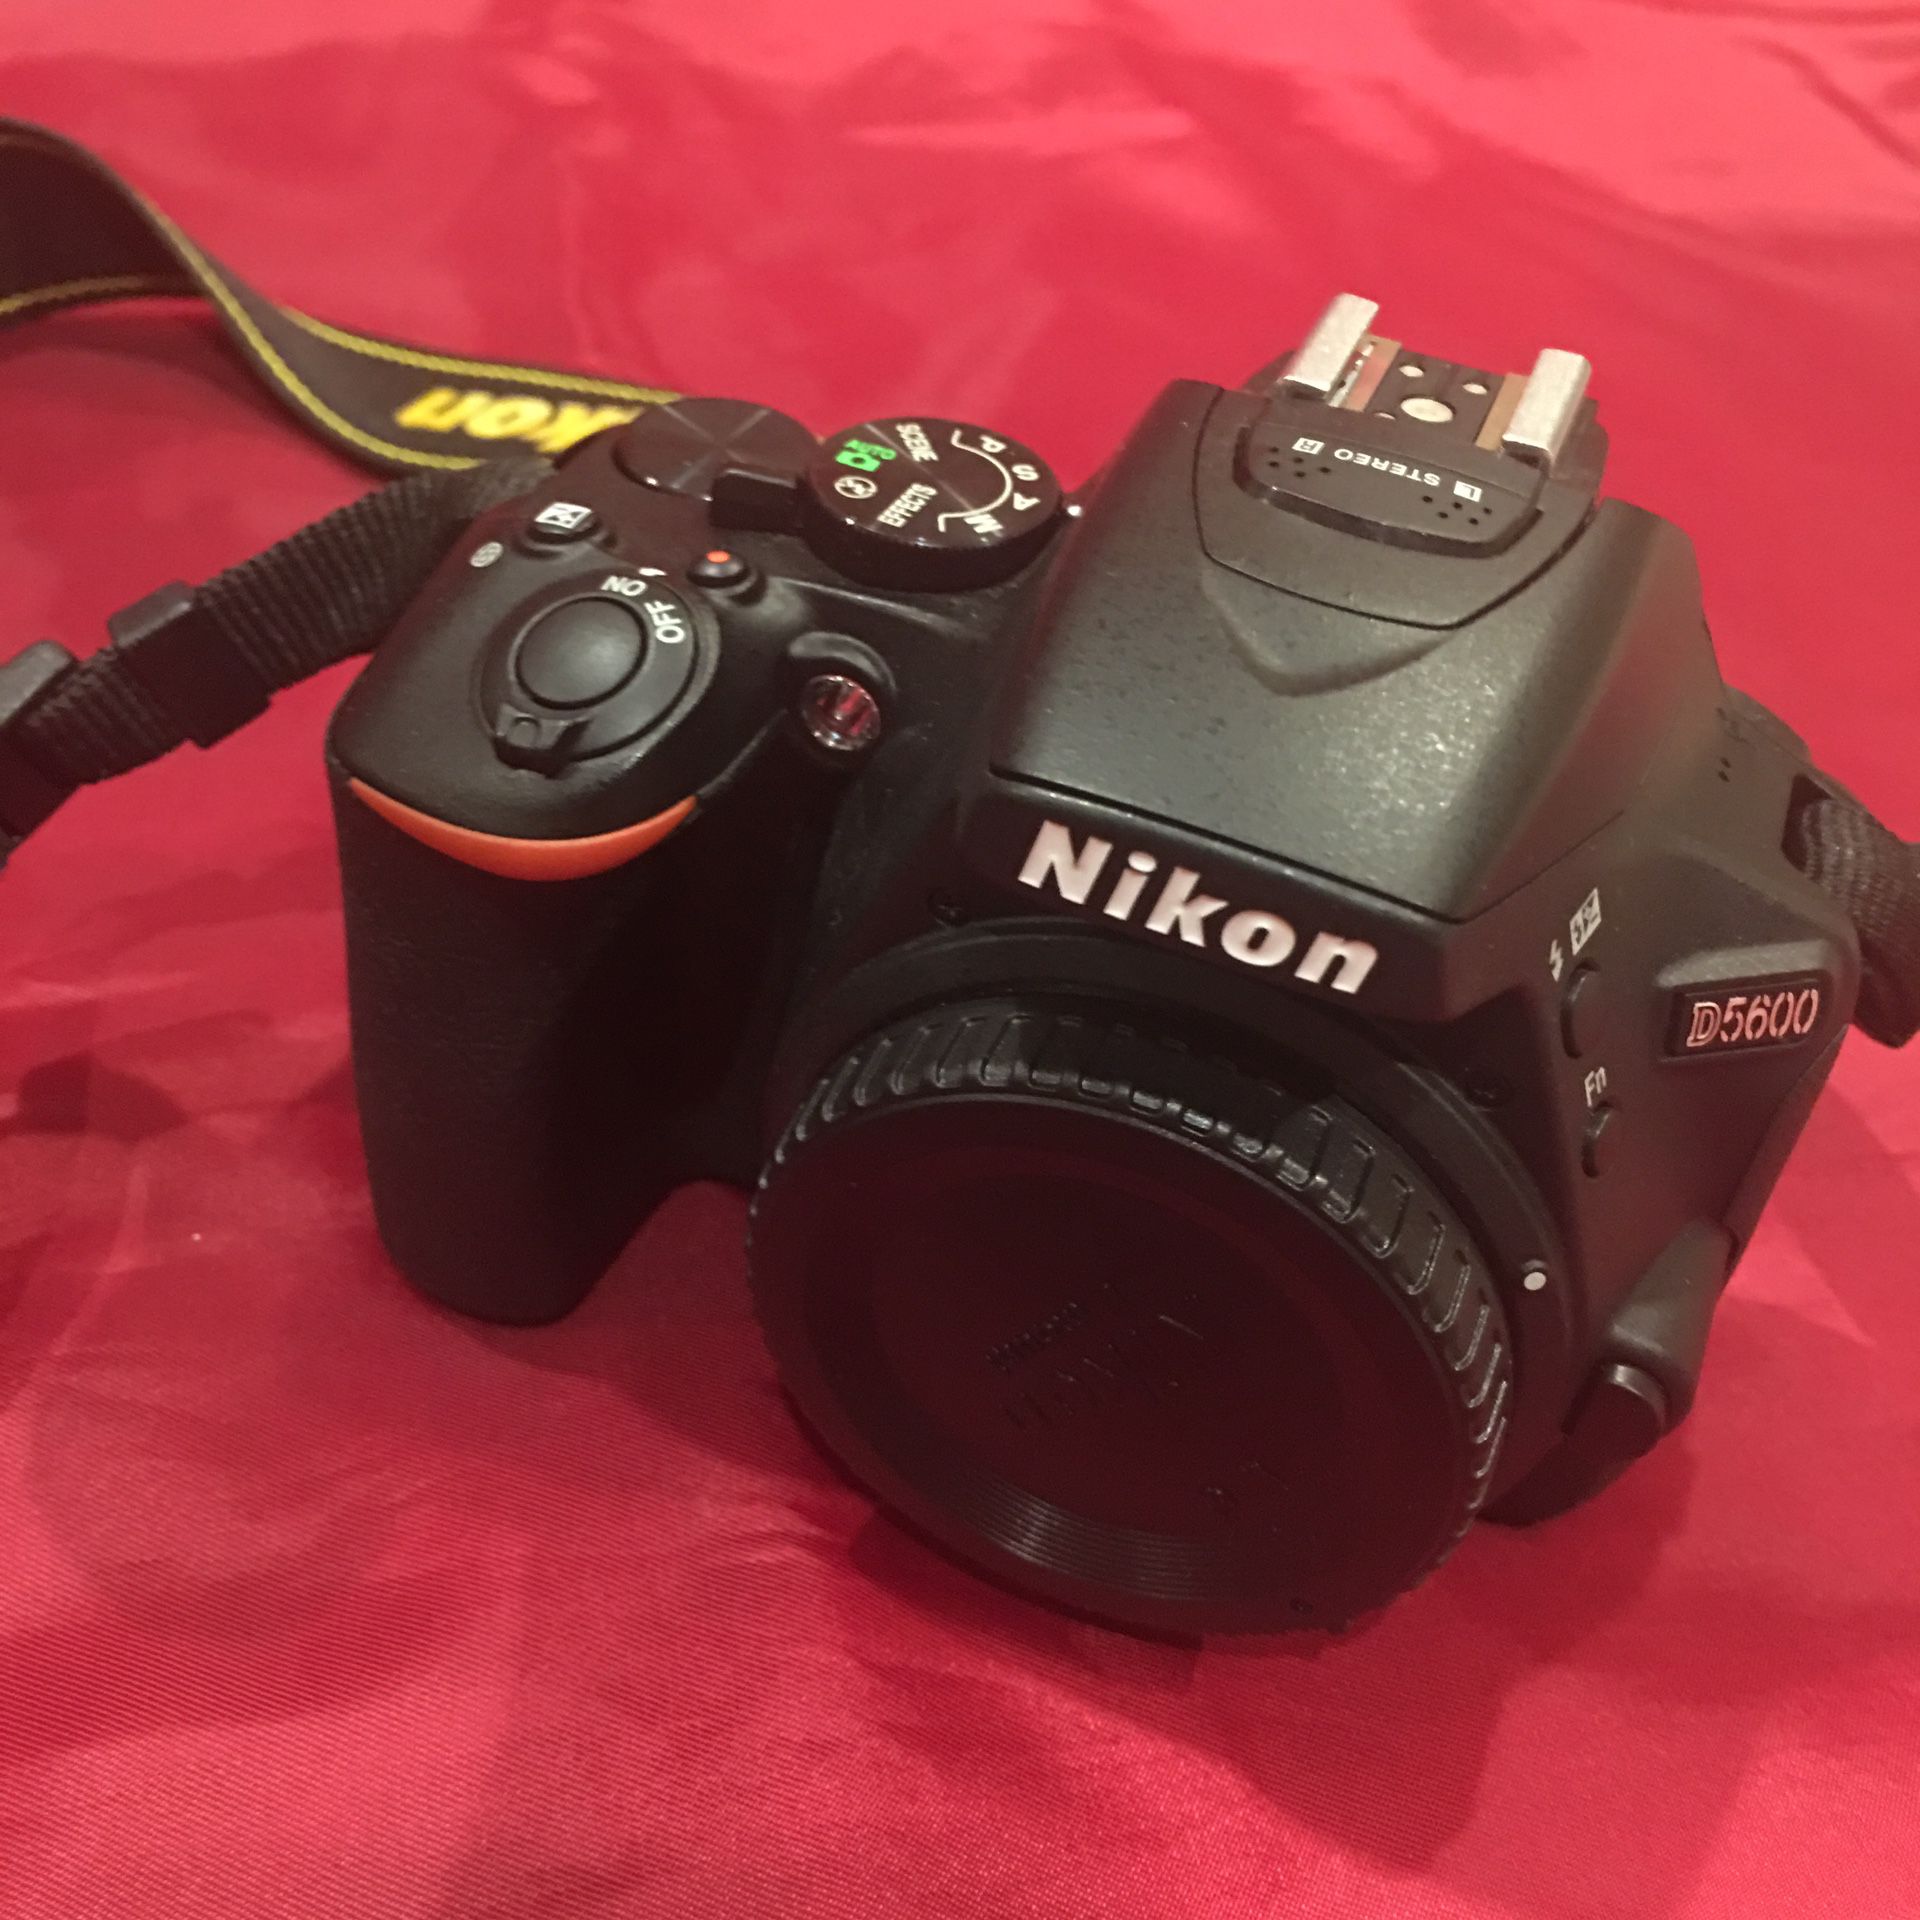 Nikon digital camera D5600